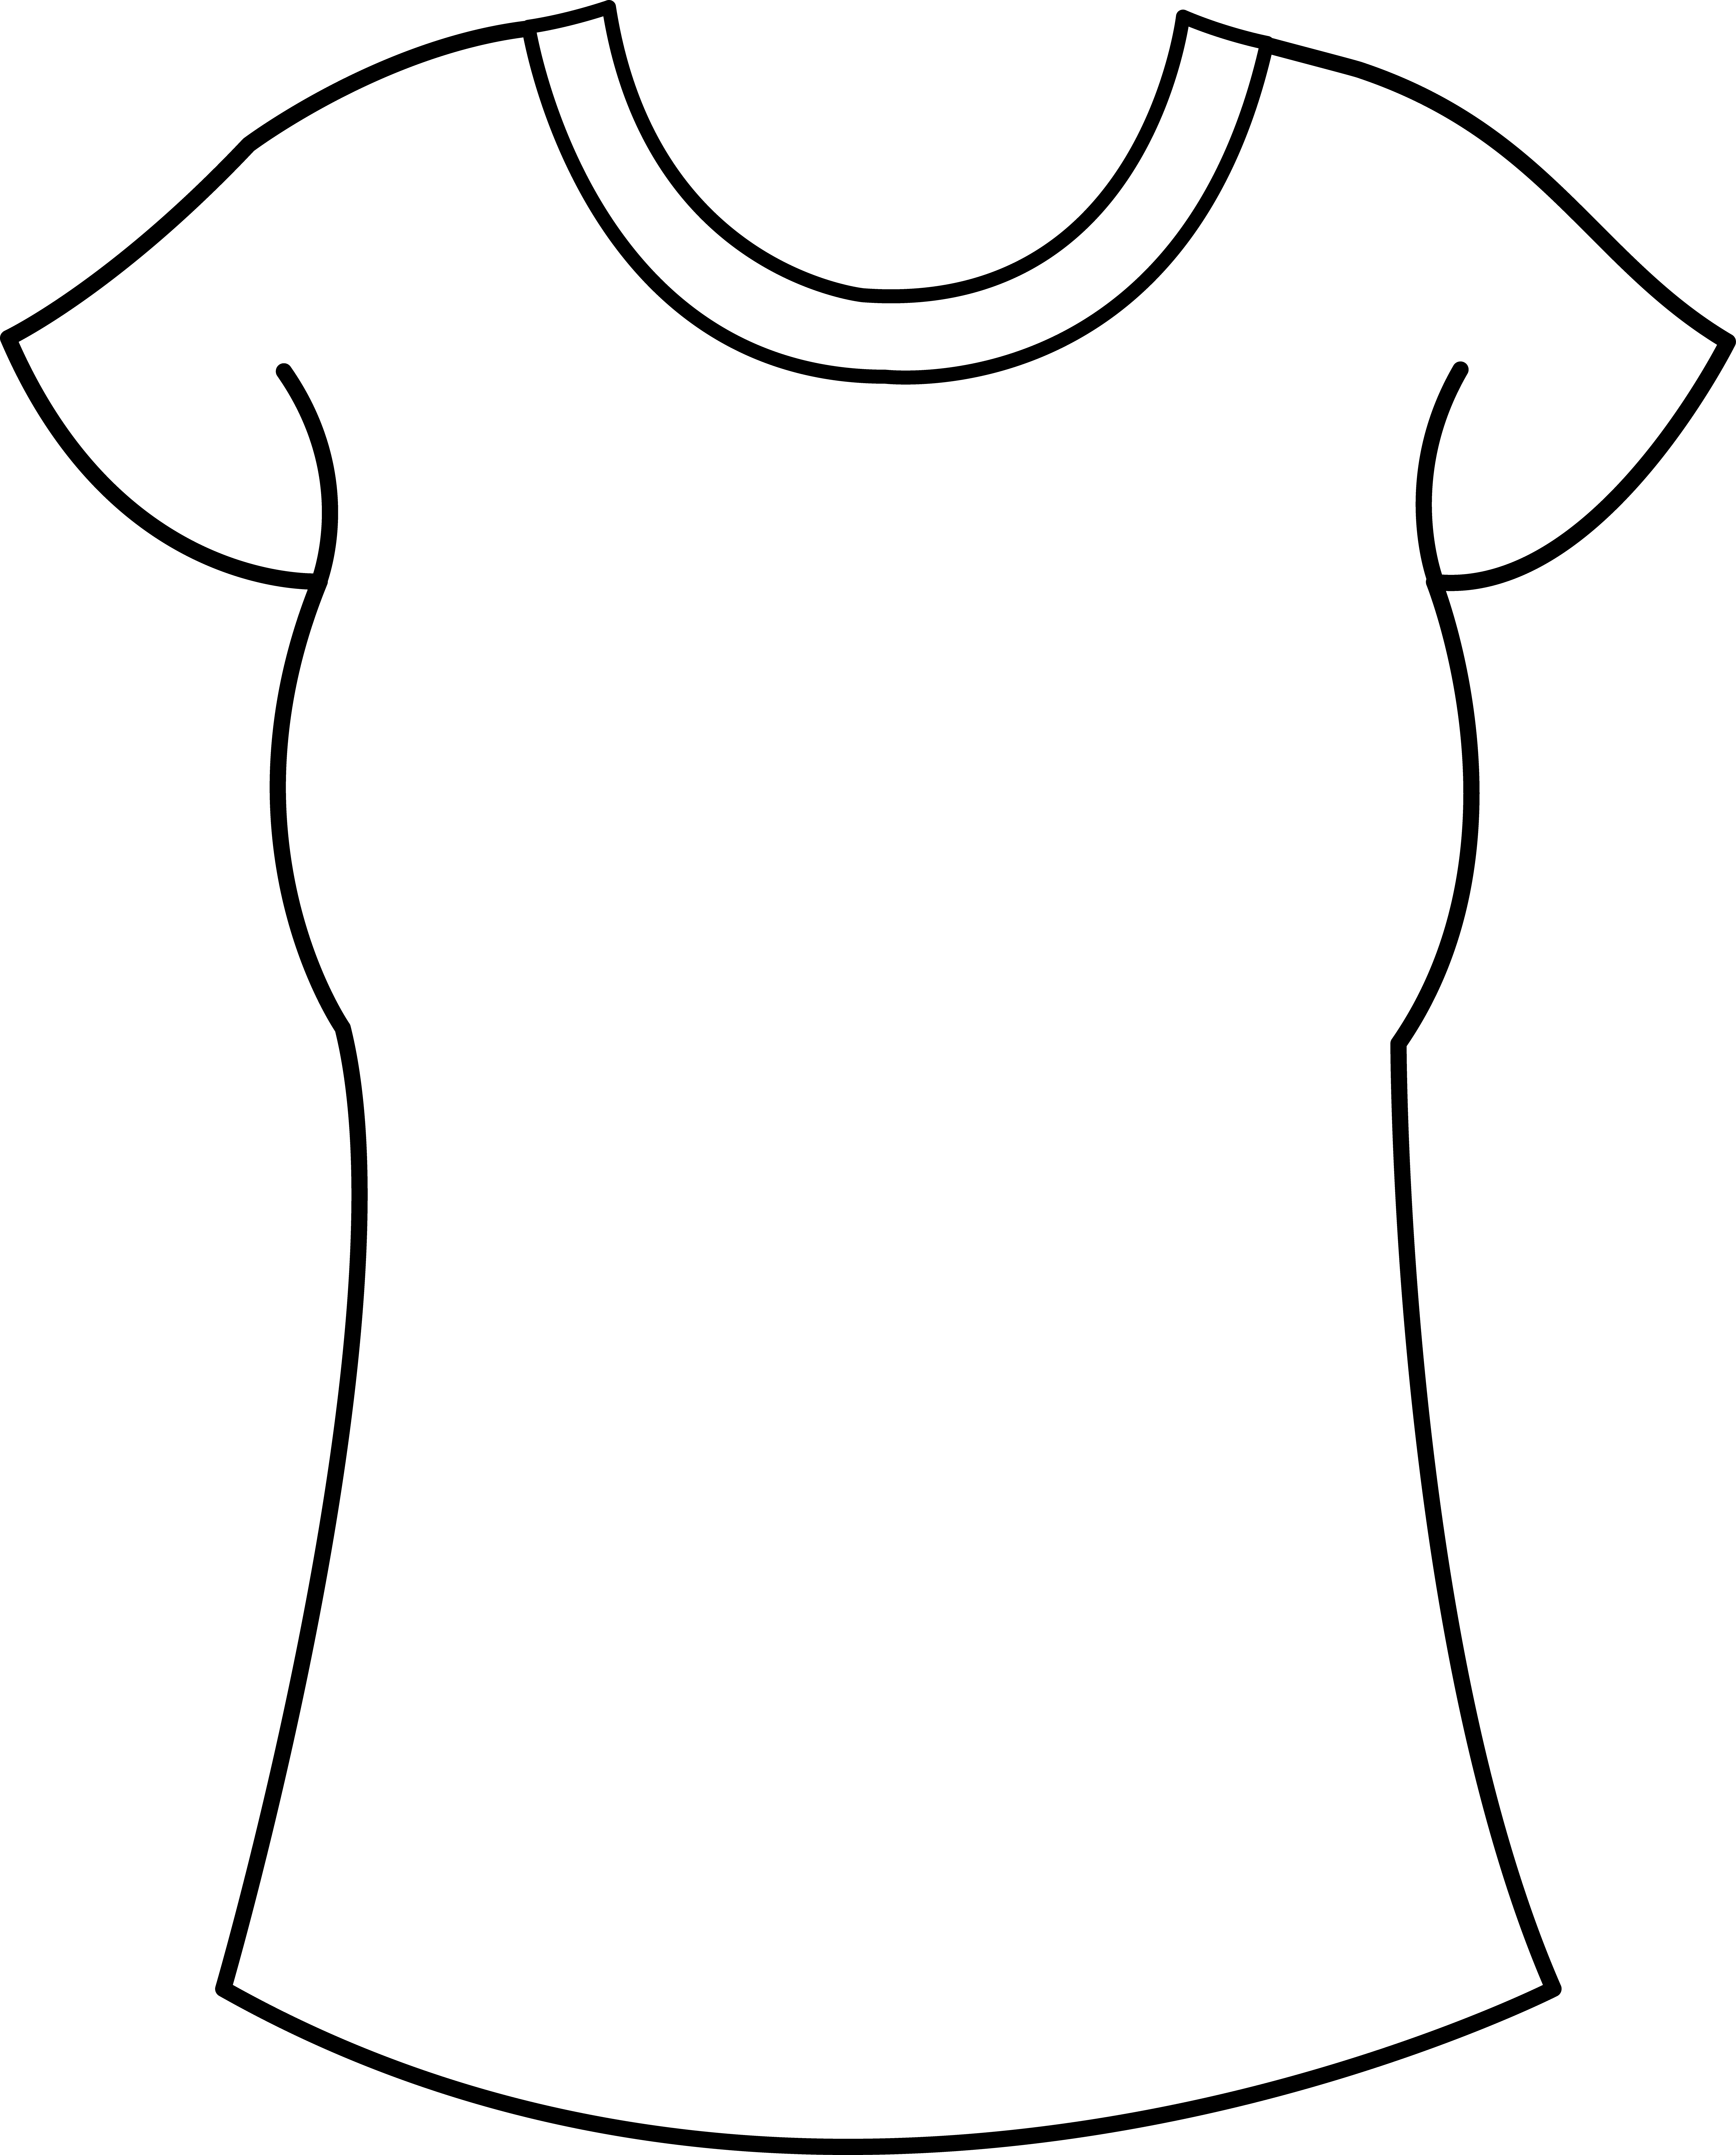 Free T Shirt Transparent, Download Free T Shirt Transparent png In Blank T Shirt Outline Template